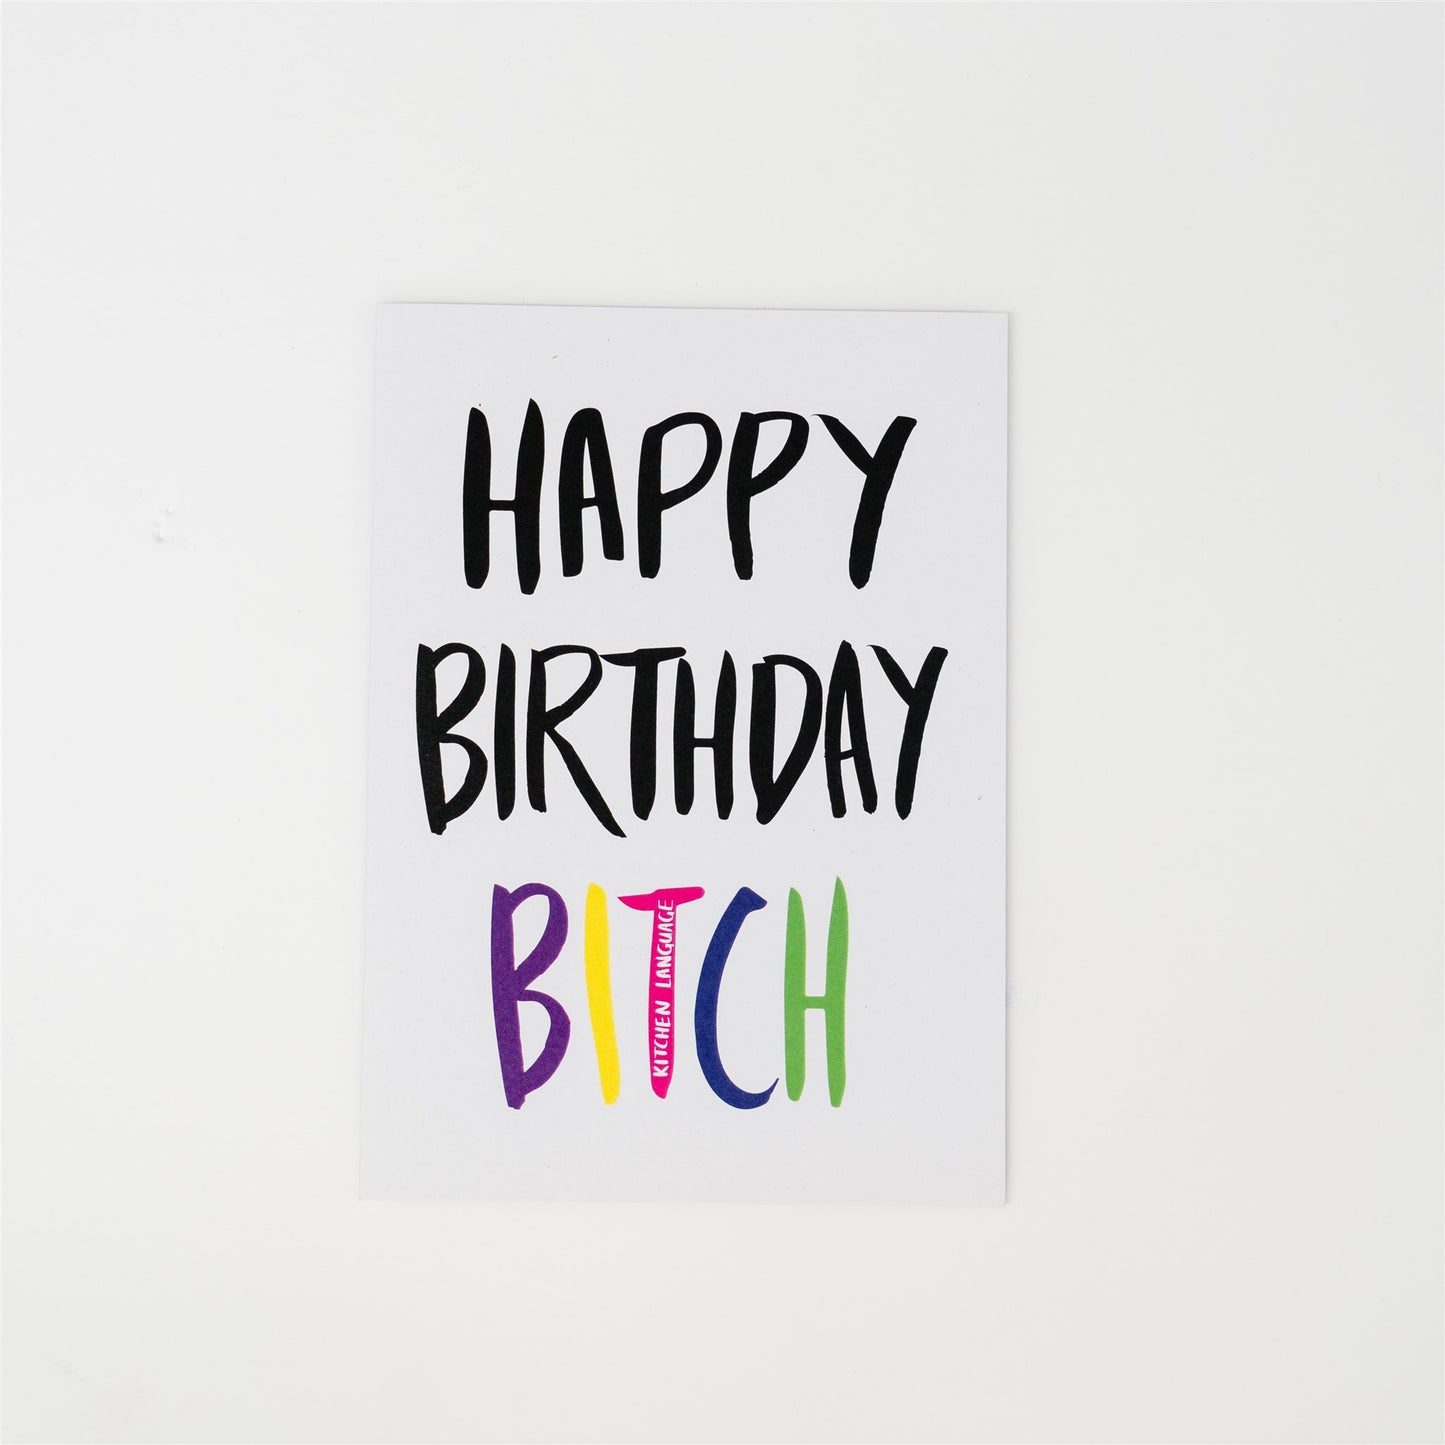 Happy Birthday Bitch- birthday greeting card- kitchen language